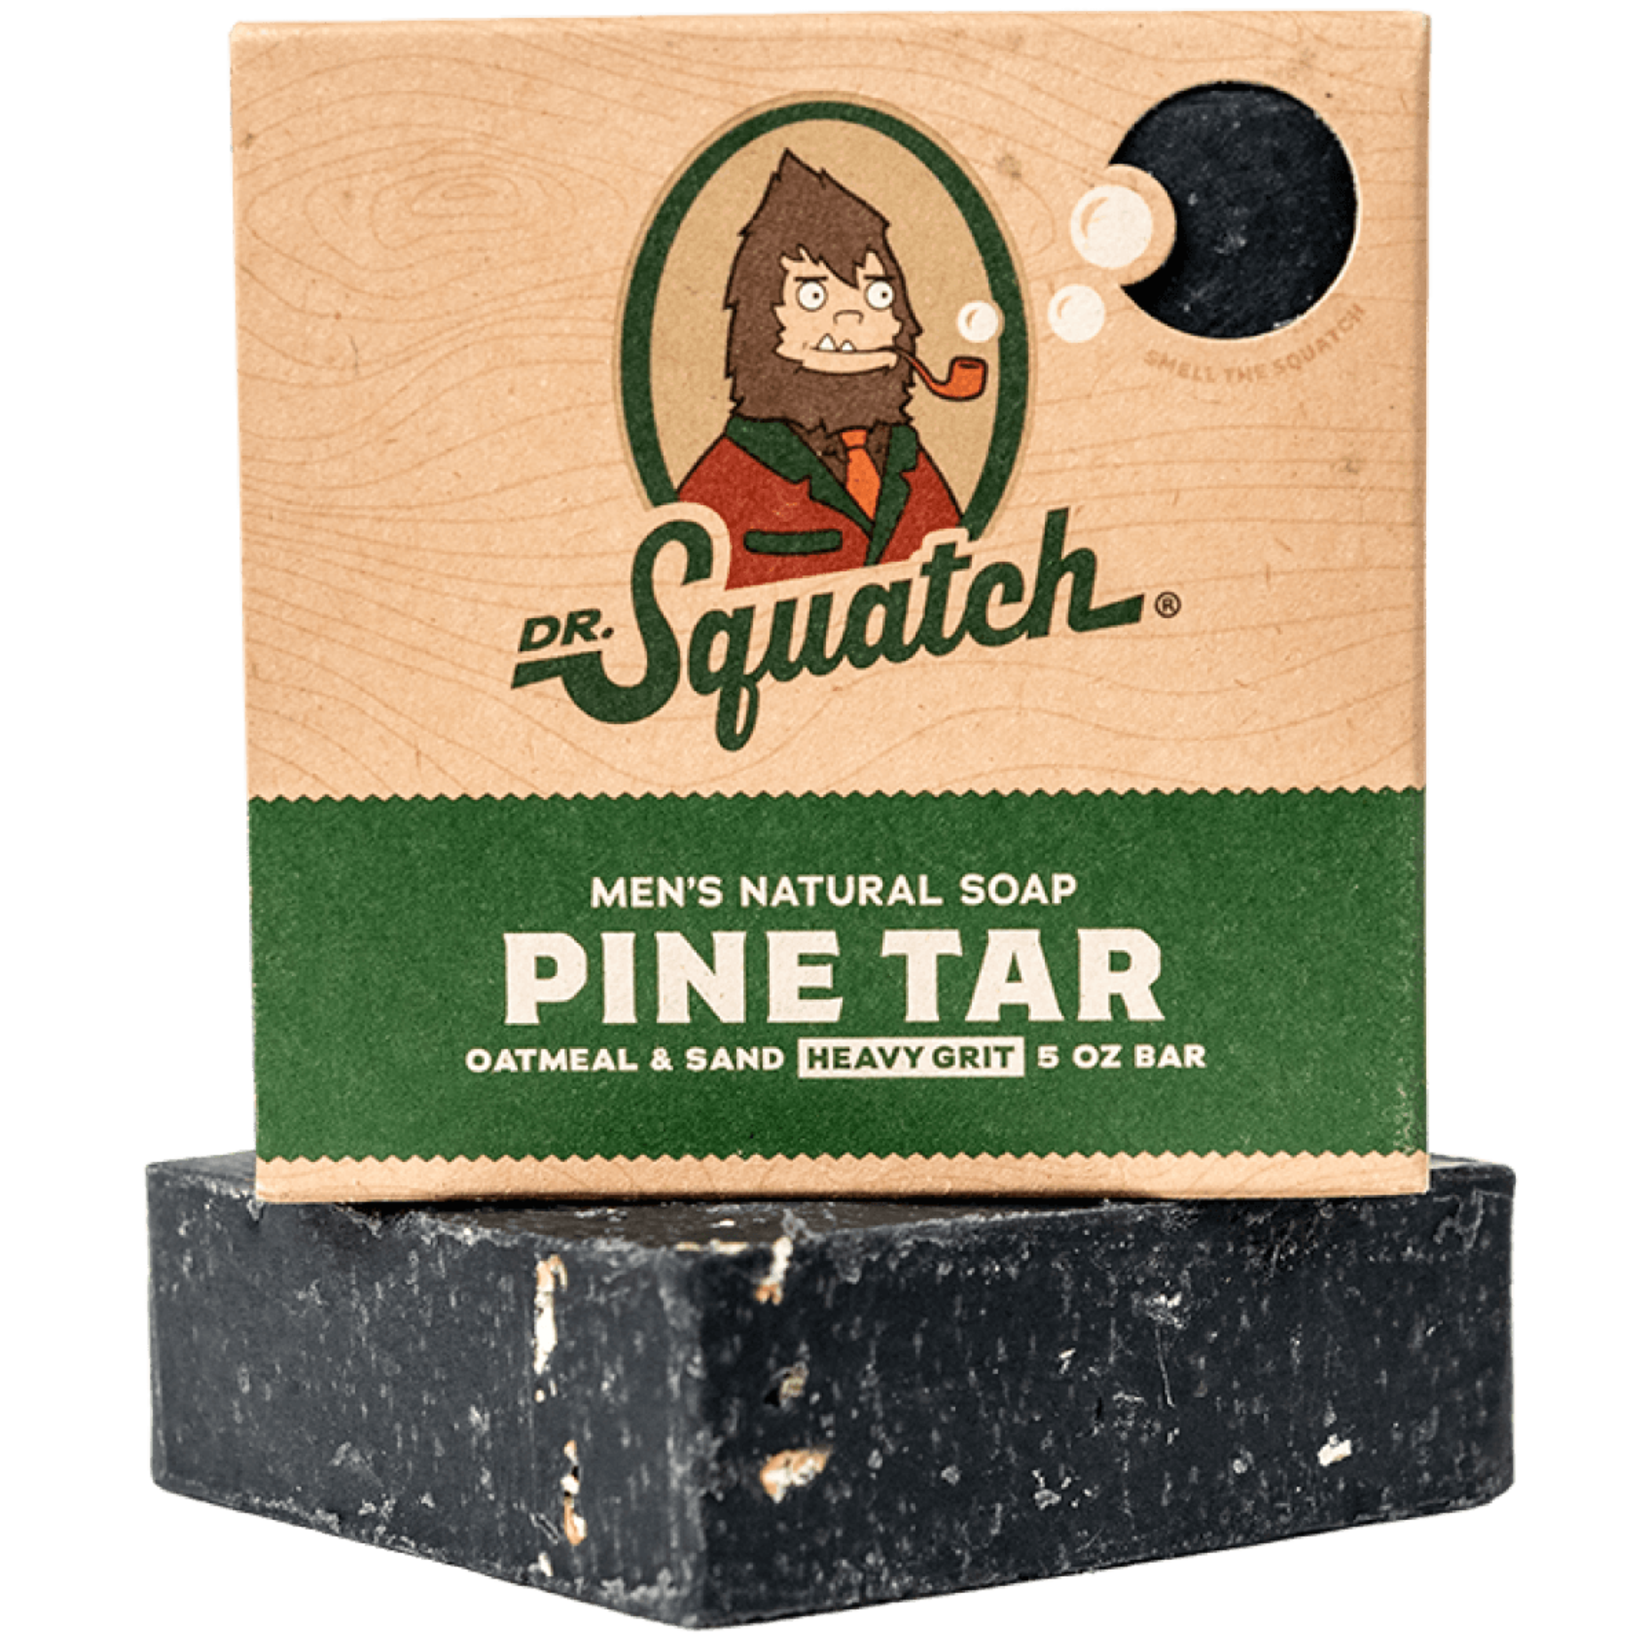 Pine Tar Soap Recipe  Dr. Squatch Copycat Recipe - The Everyday